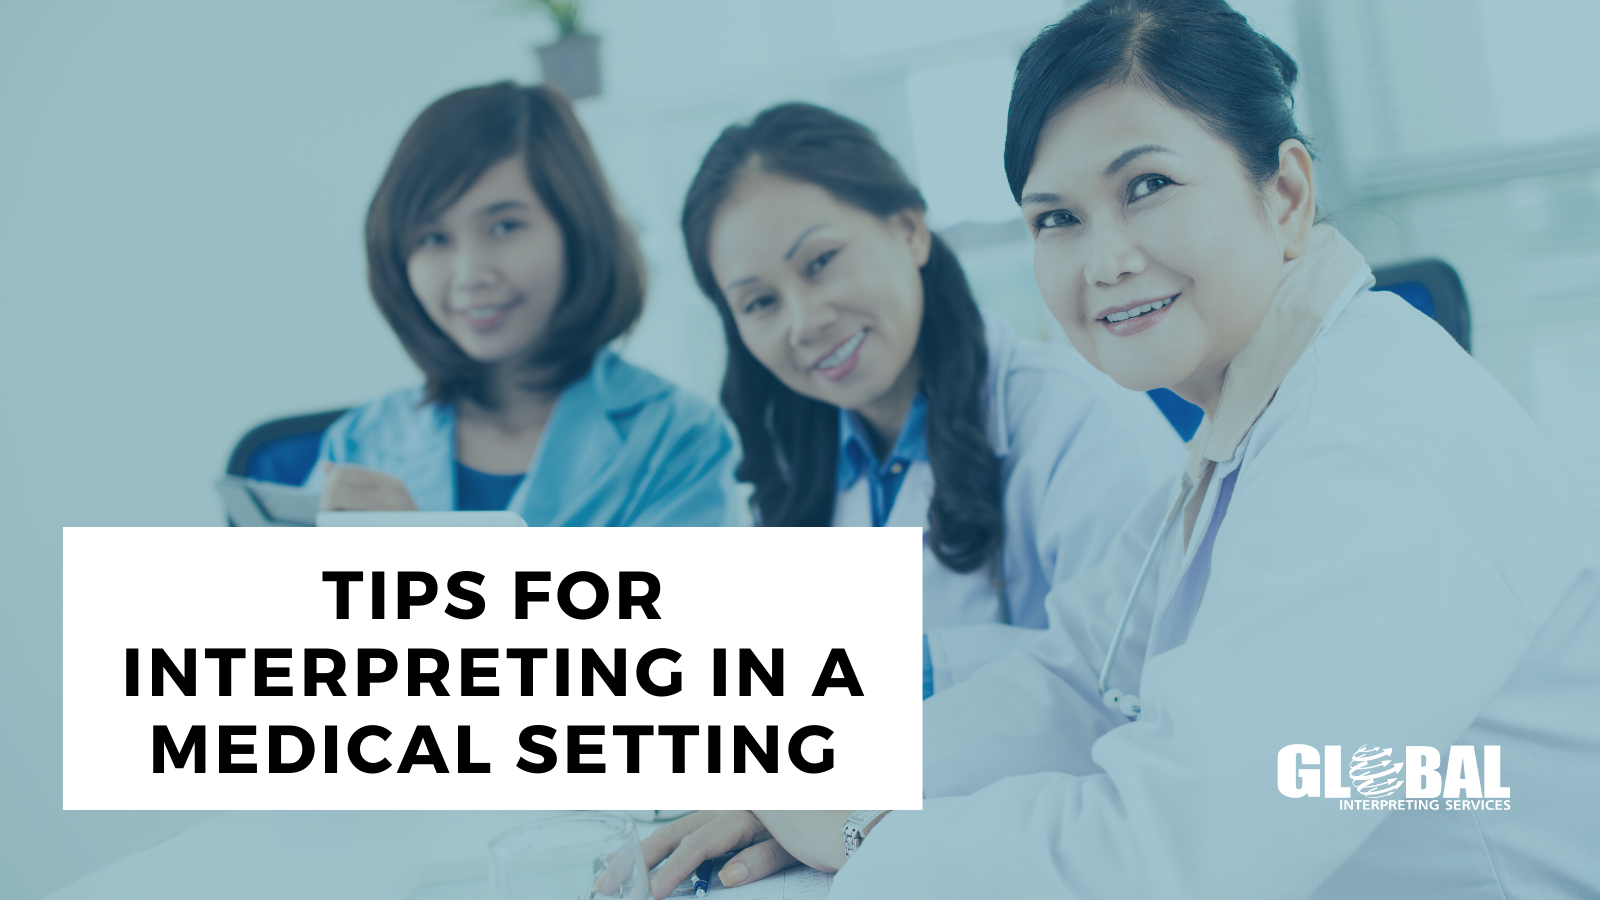 Tips for interpreting in medical settings